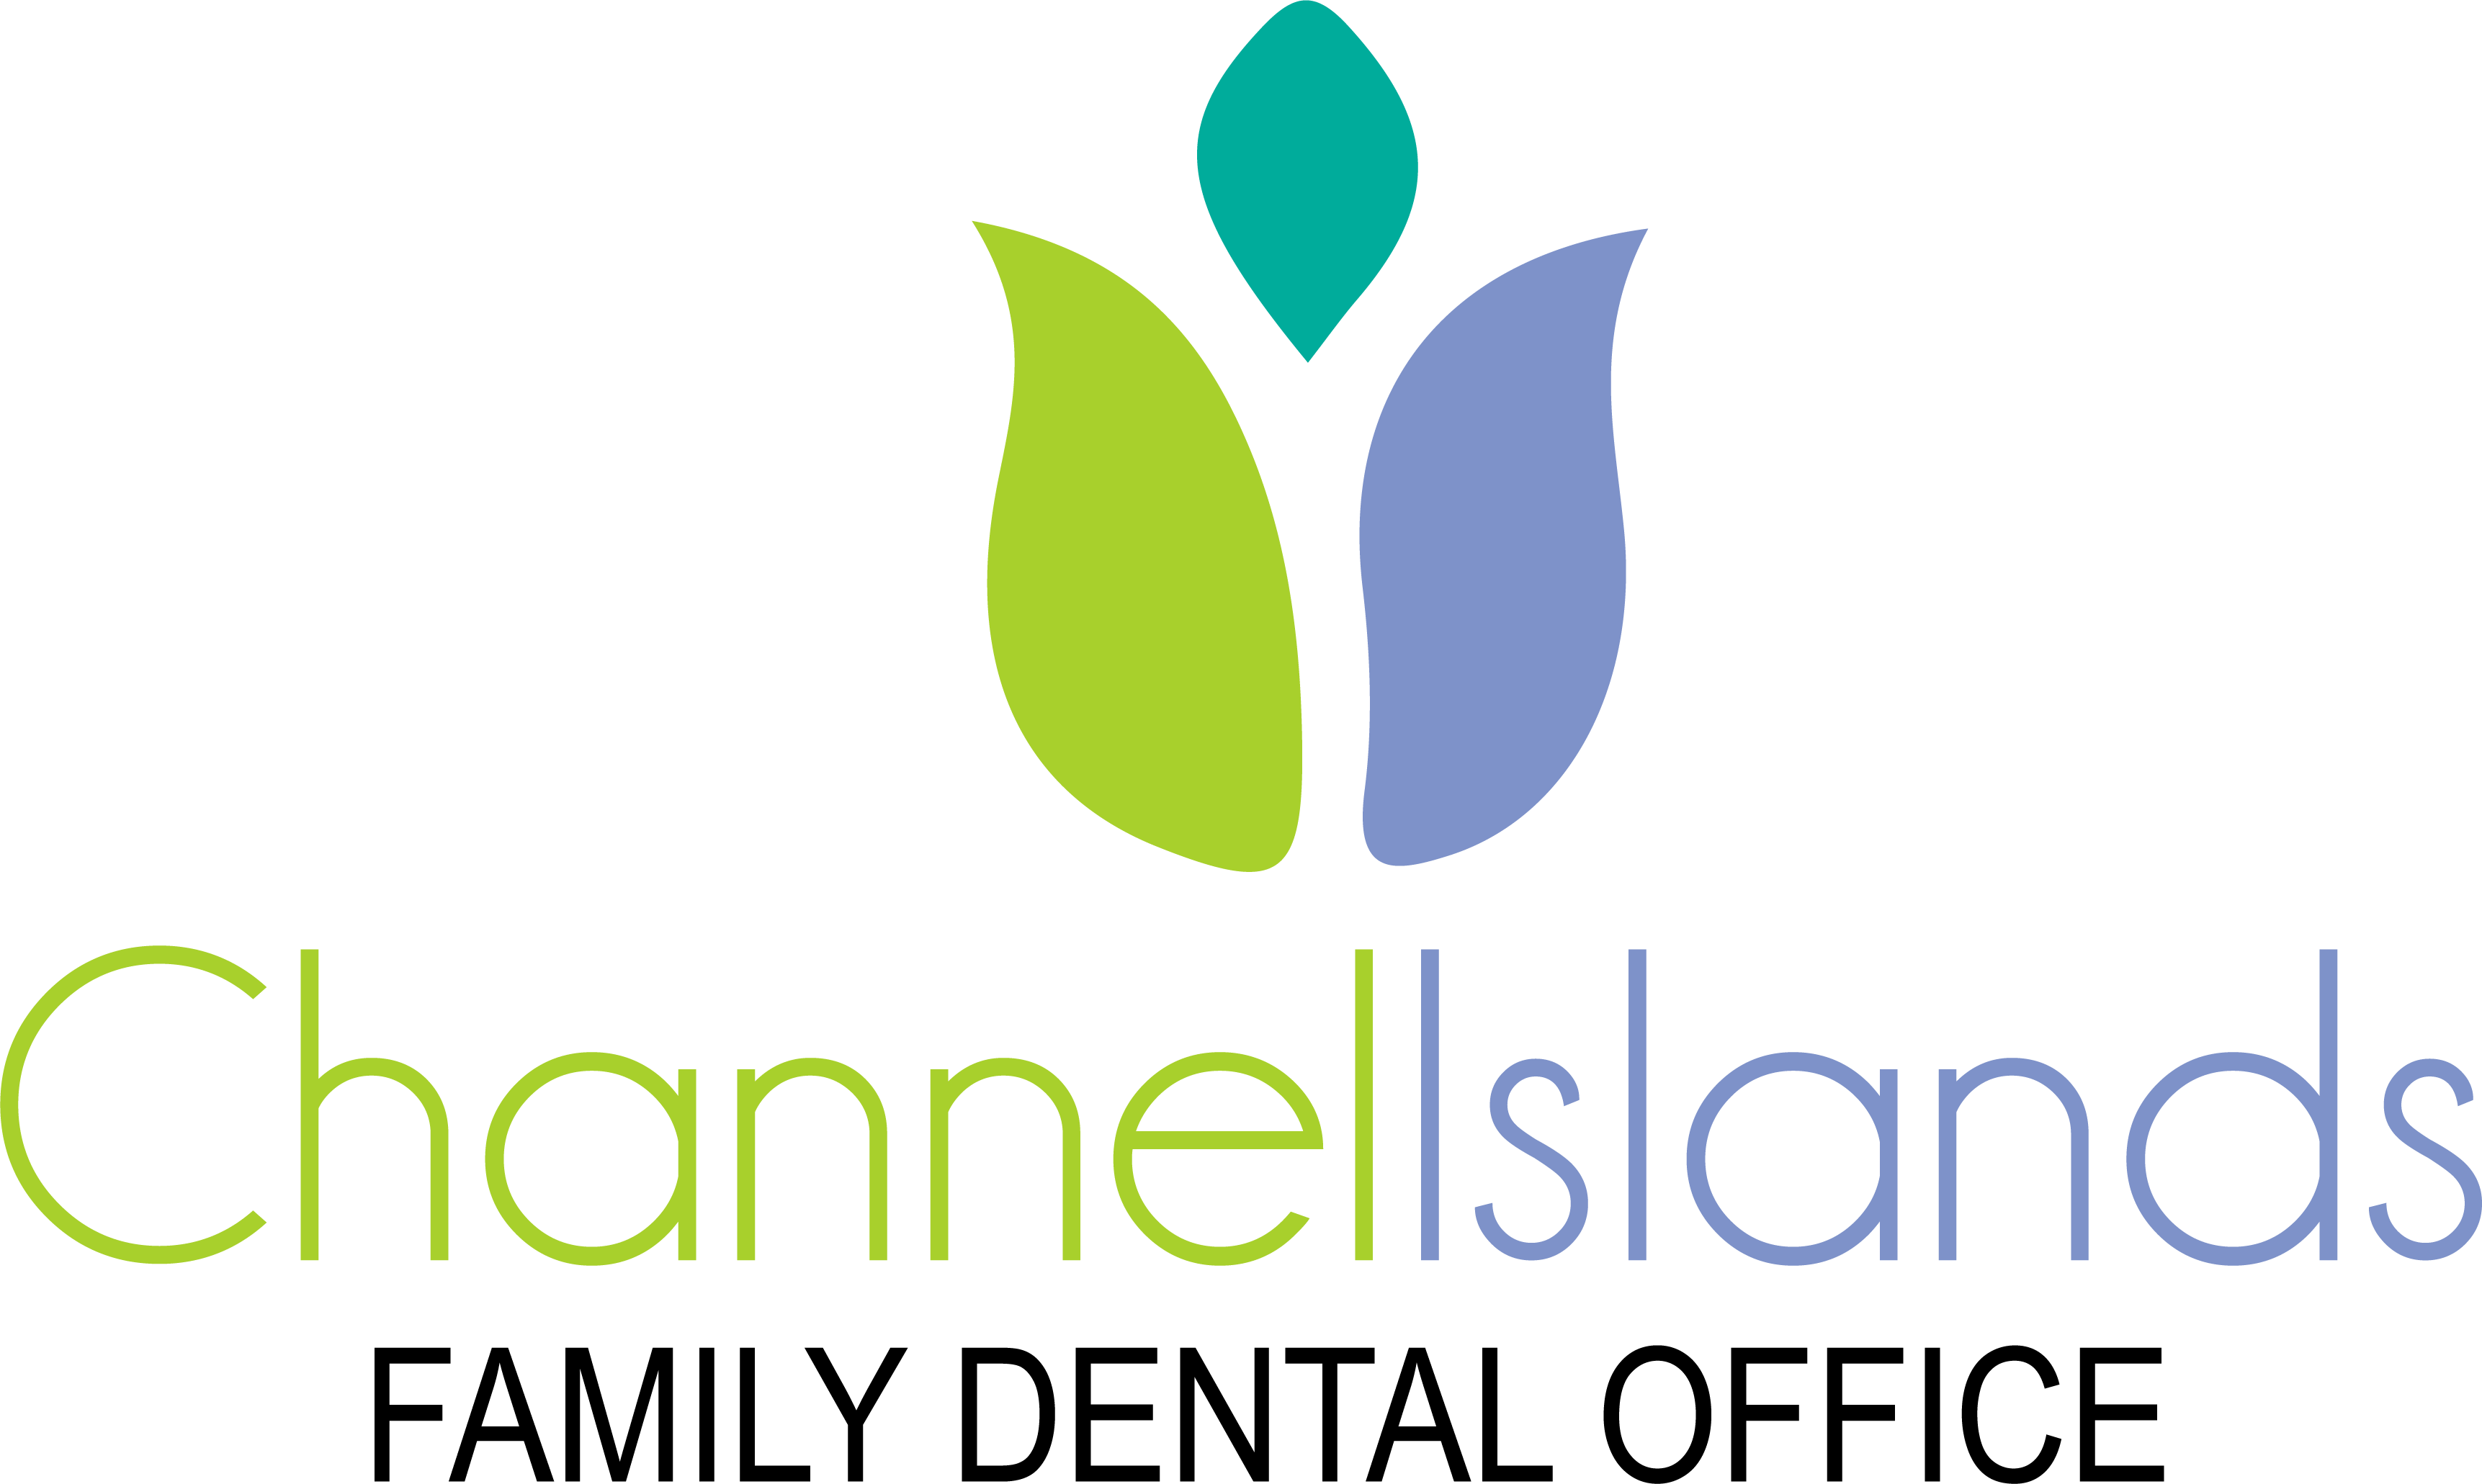 channel islands family dental office